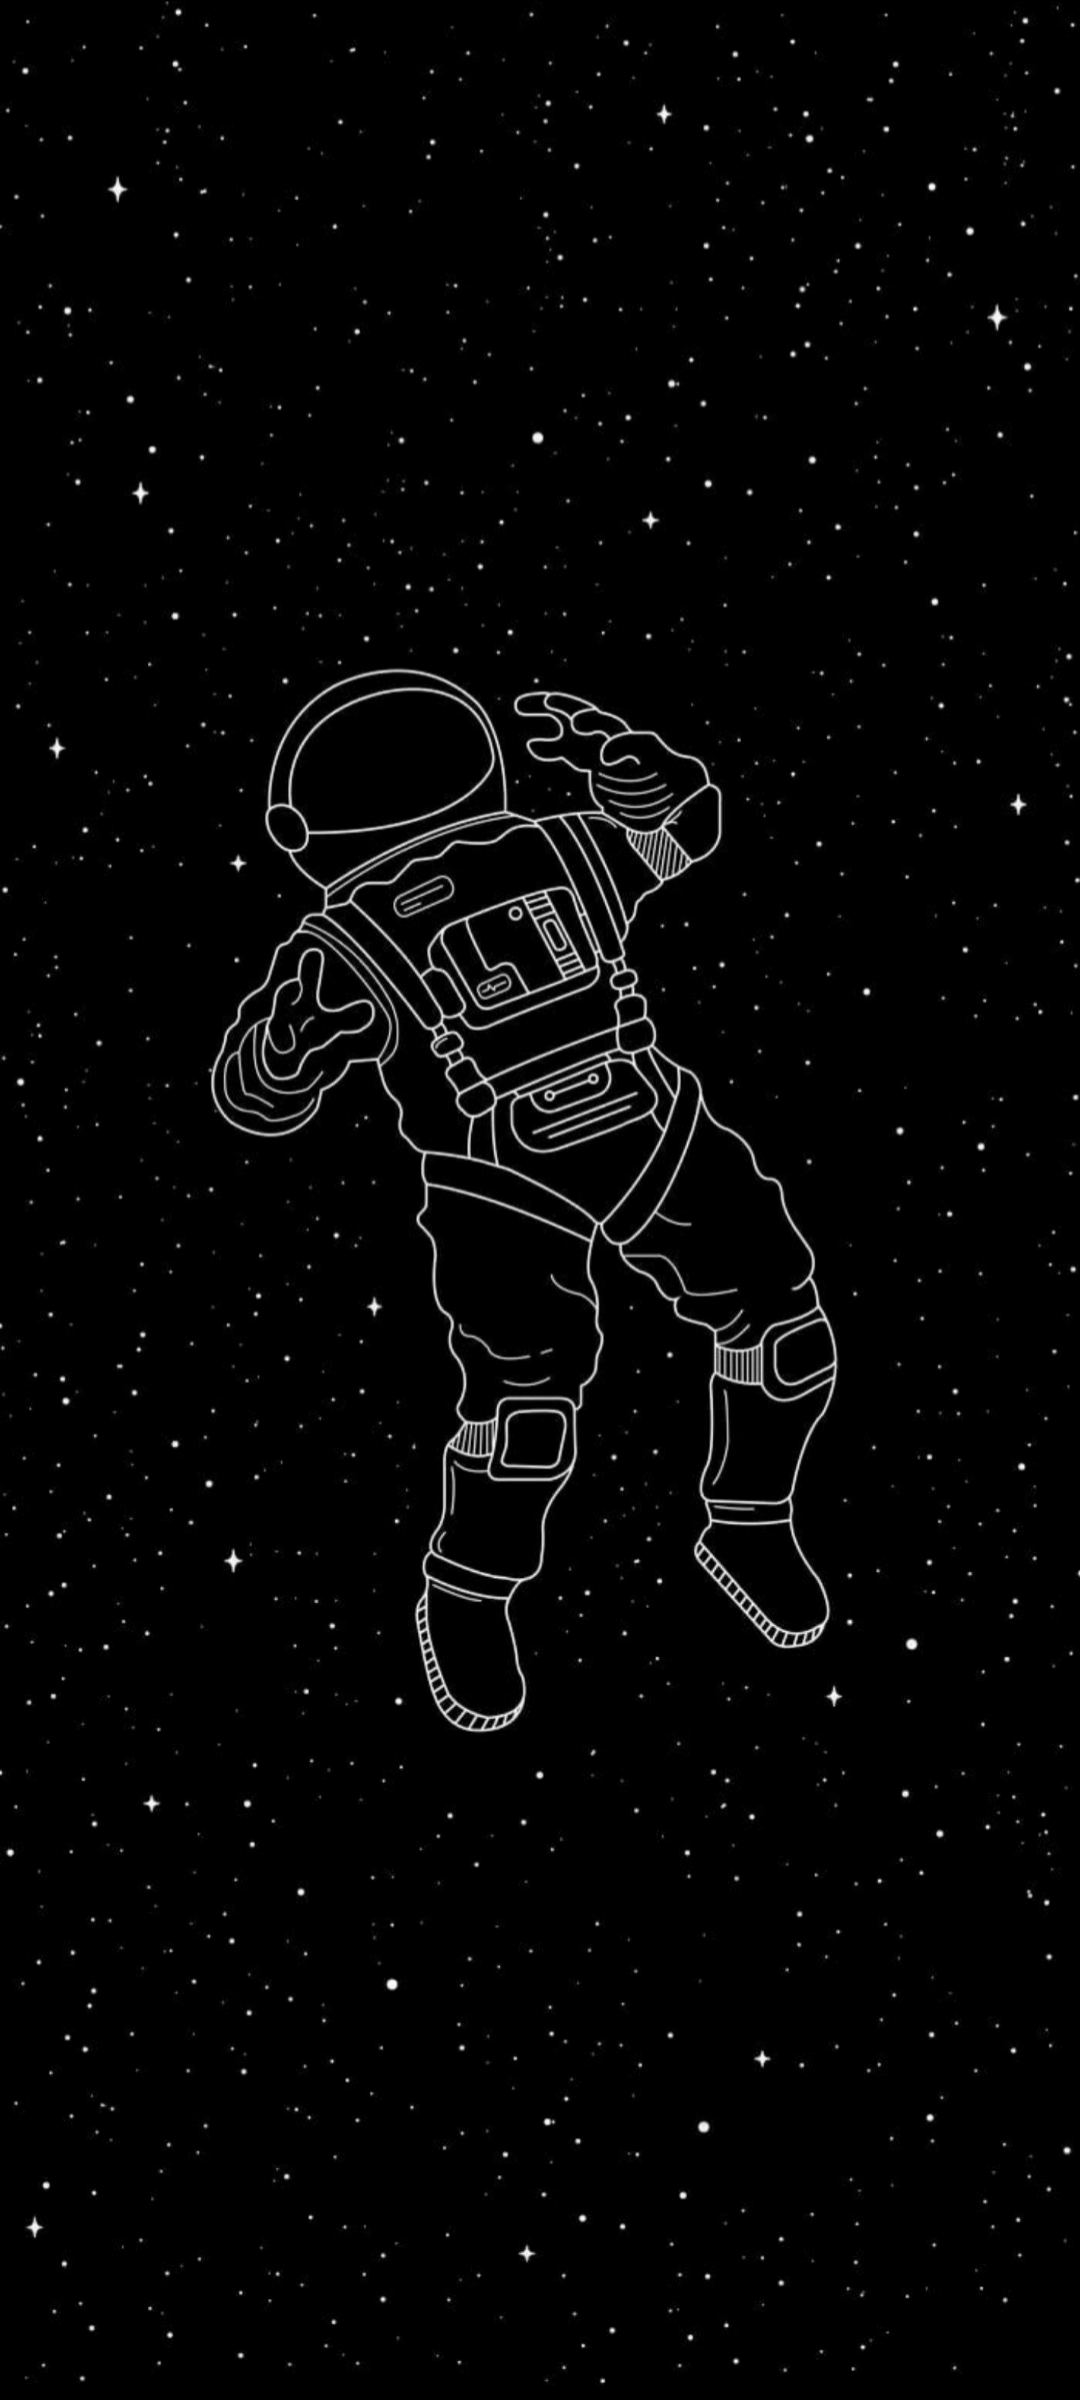 Astronaut, stars, black background, wallpaper, phone background - 1080x2400, space, illustration, astronaut